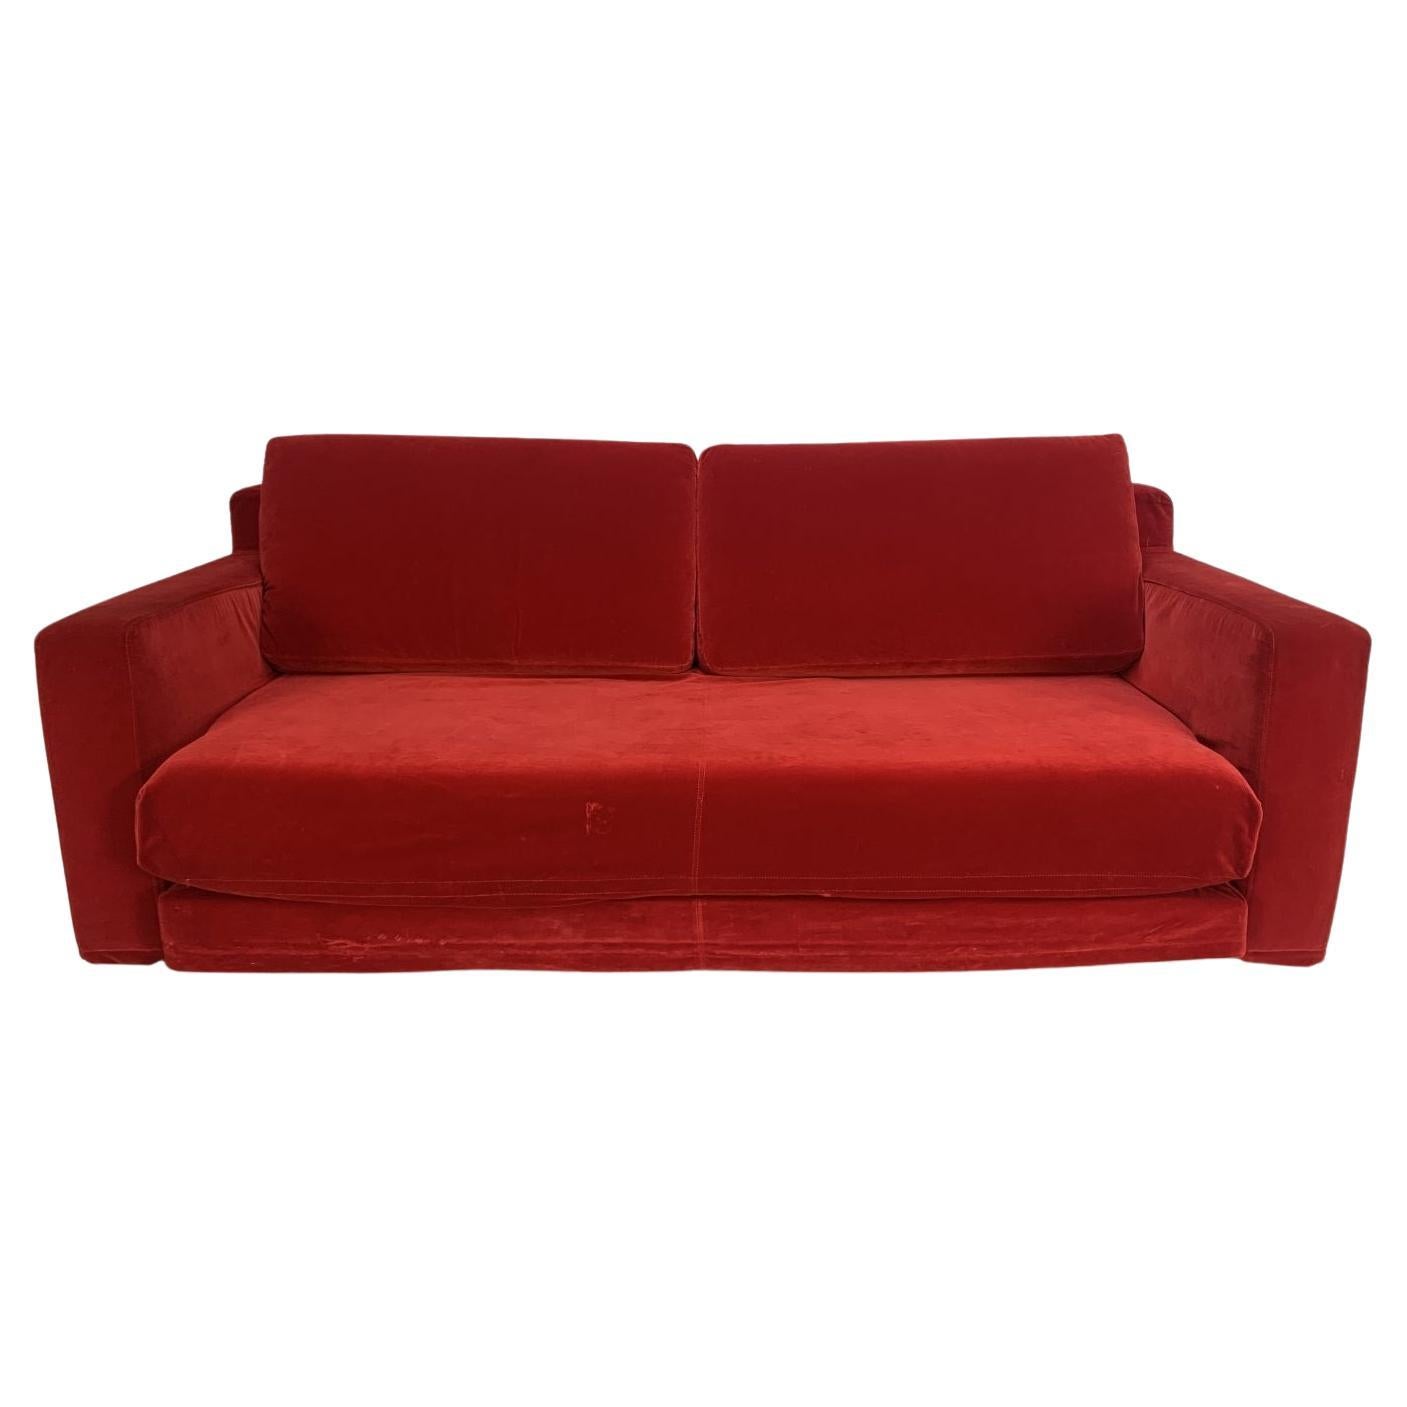 Flexform “Winny” Large 2.5-Seat Sofa-Bed in Red Velvet